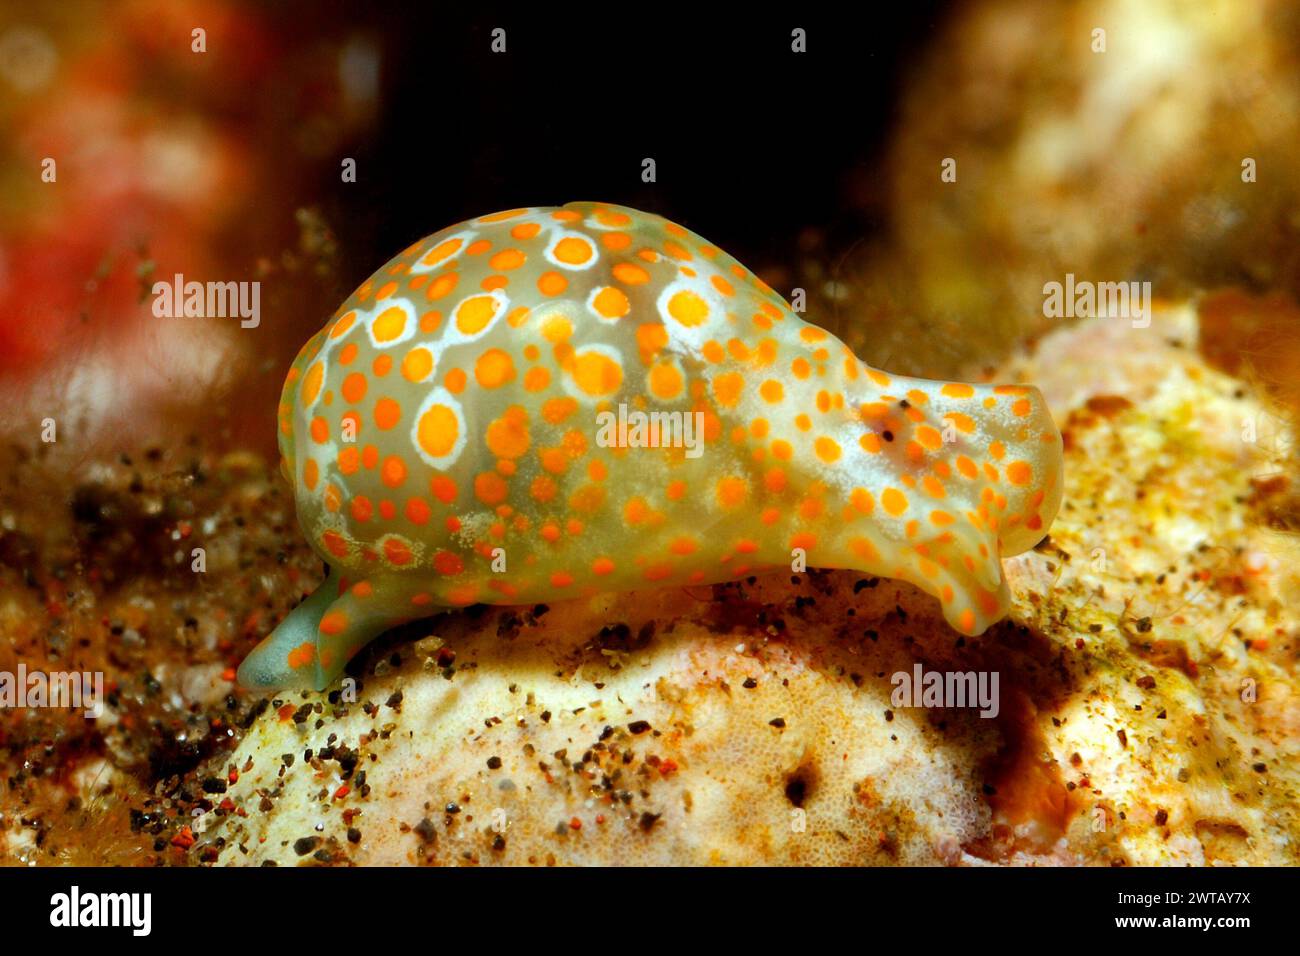 Orange-Spotted Glassy-Bubble Snail, Lamprohaminoea cymbalum. Previously described as Haminoea cymbalum. Tulamben, Bali, Indonesia. Bali Sea Stock Photo